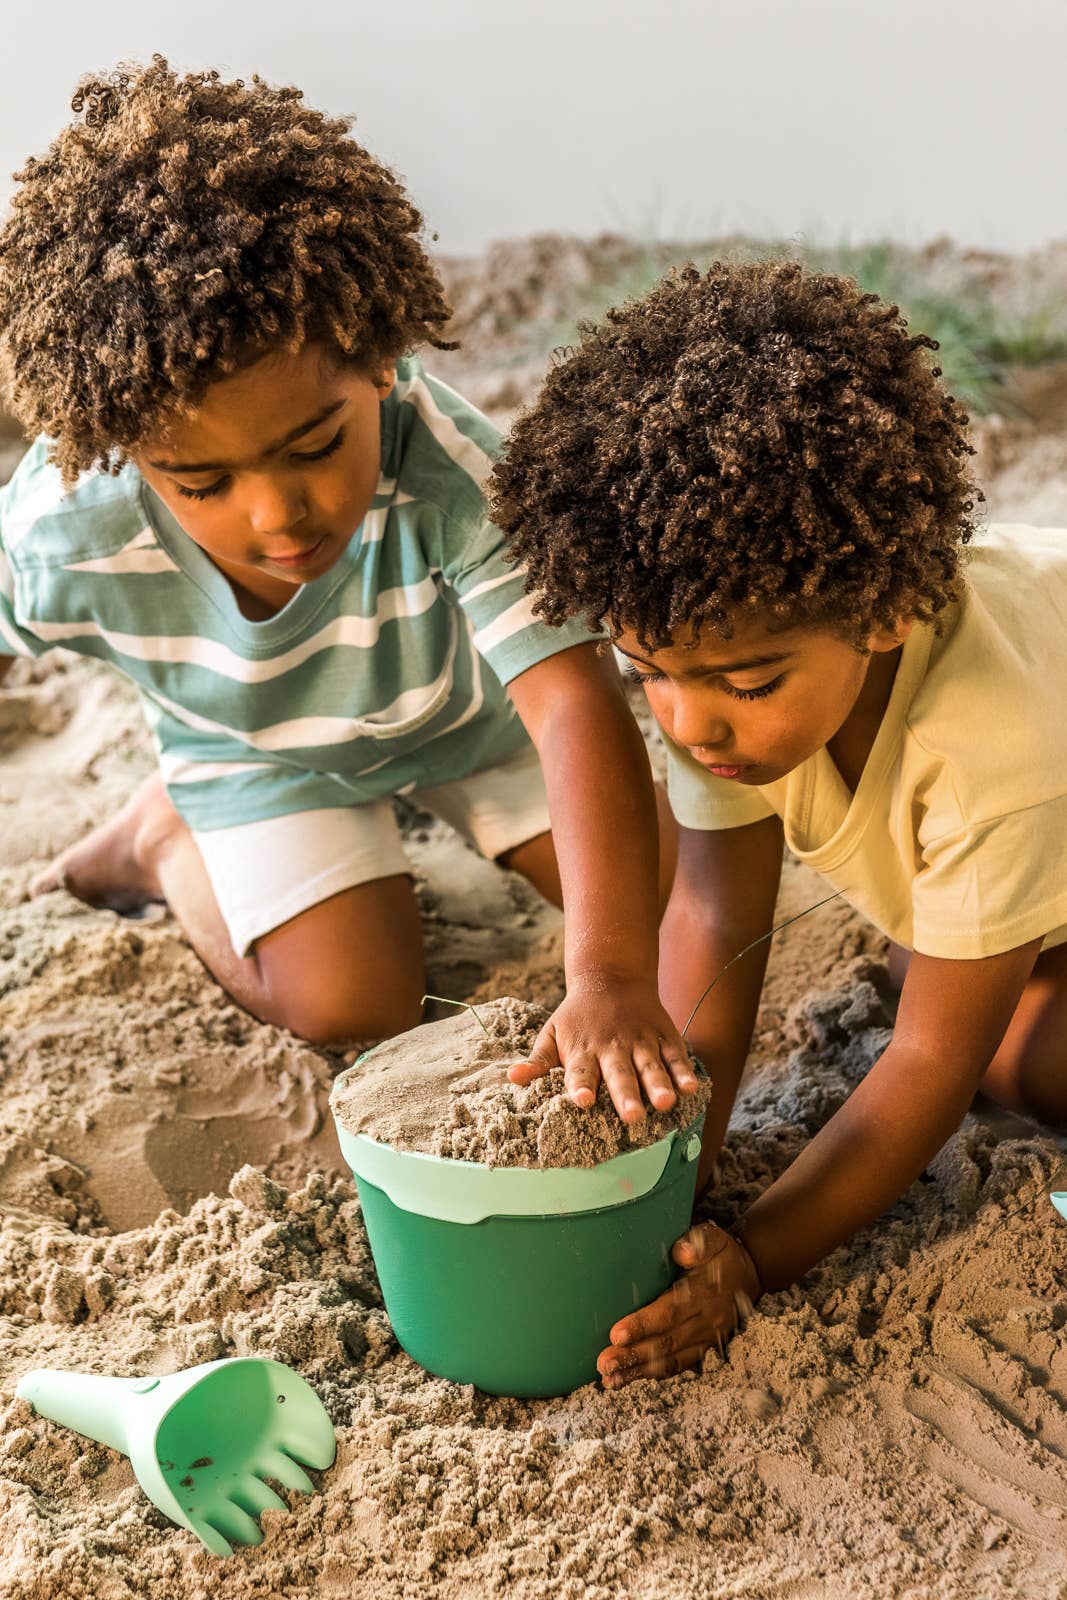 Quut Bucki - Bucket & Sand Sifter. Beach Sand and Pool Toy.